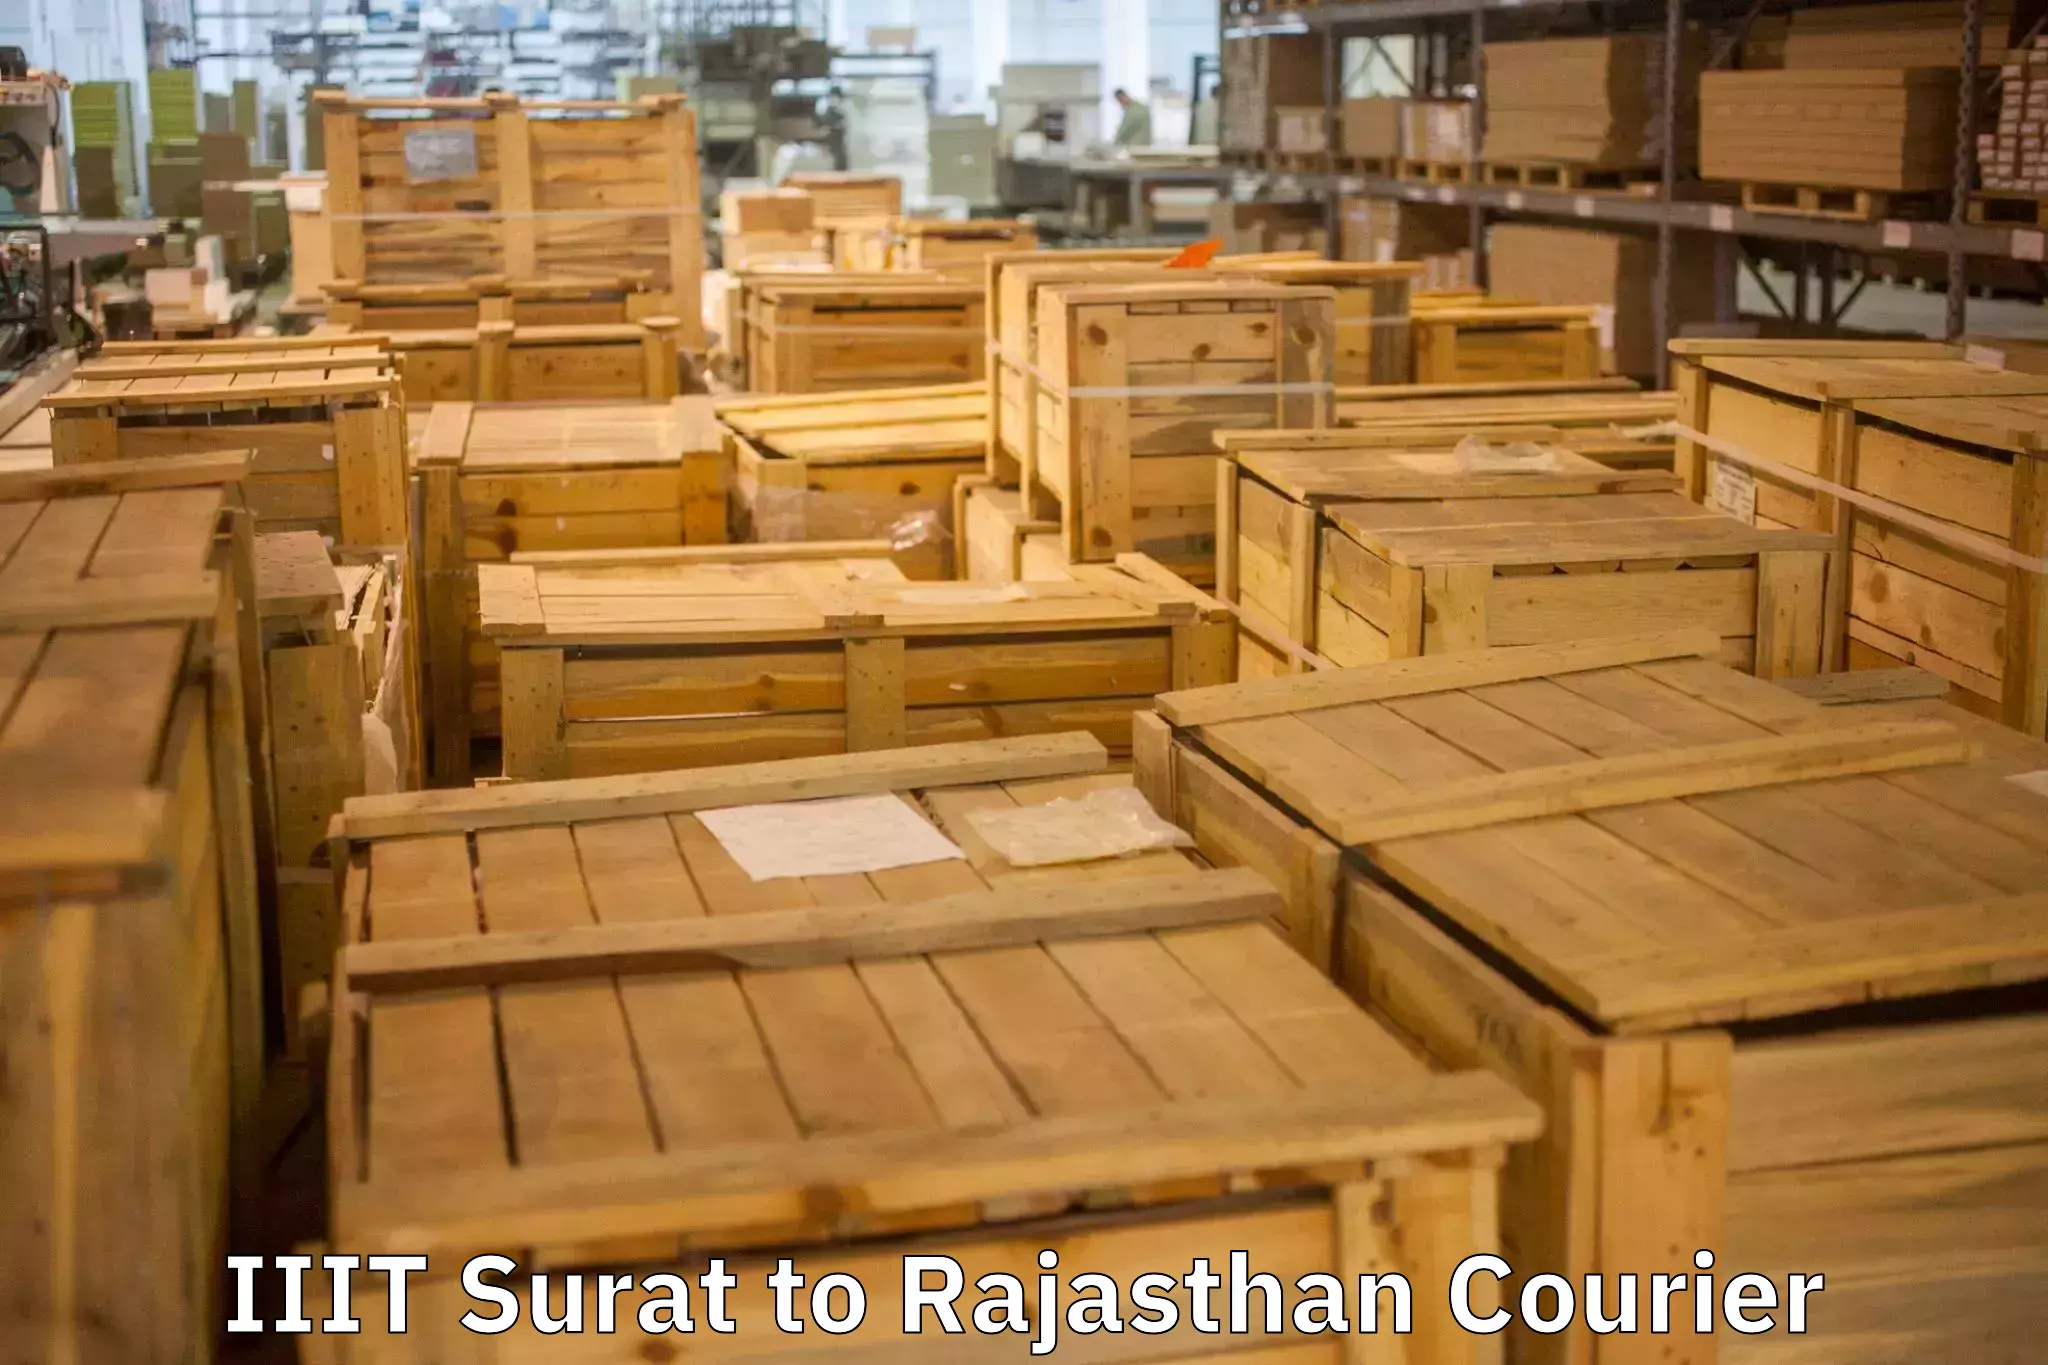 Furniture delivery service IIIT Surat to Dhorimana